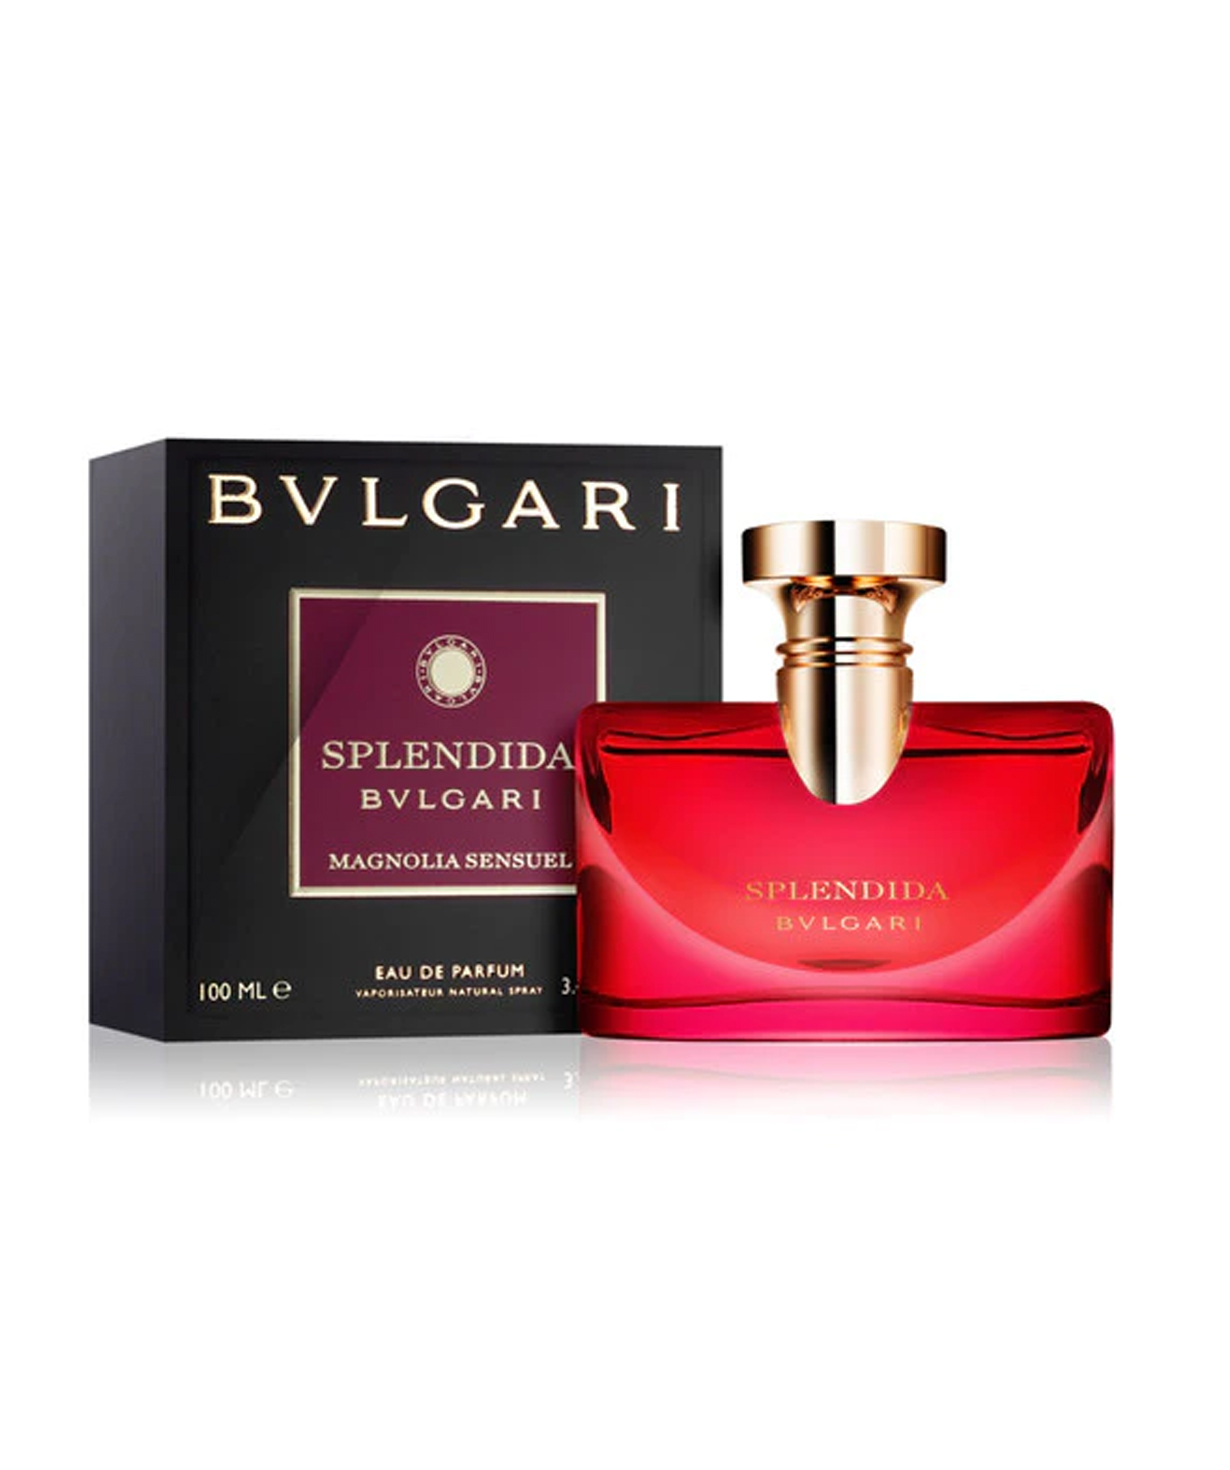 Perfume «Bvlgari» Splendida Magnolia Sensuel, for women, 100 ml